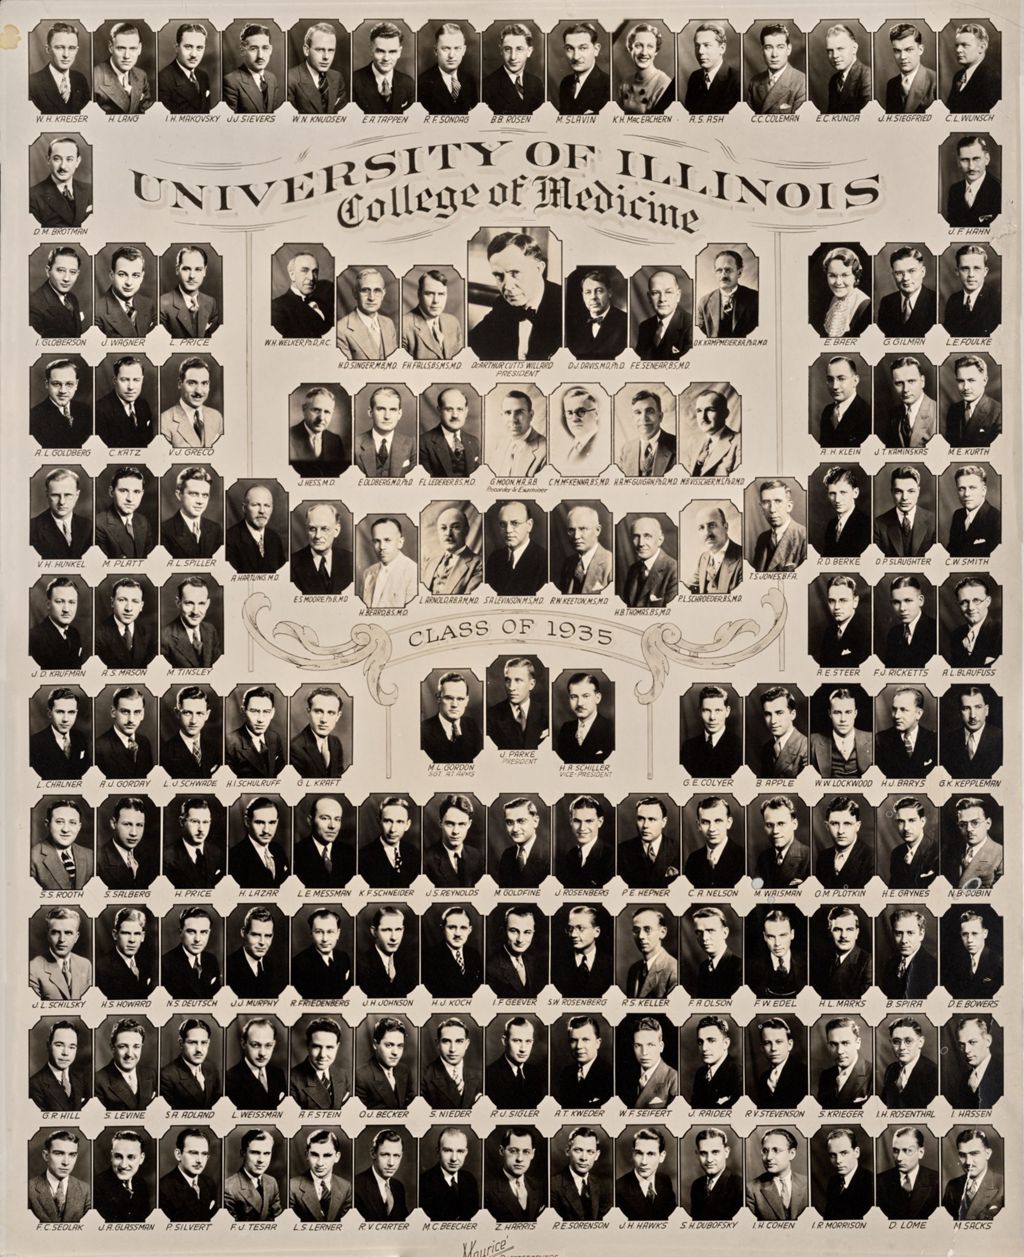 Miniature of 1935 graduating class, University of Illinois College of Medicine